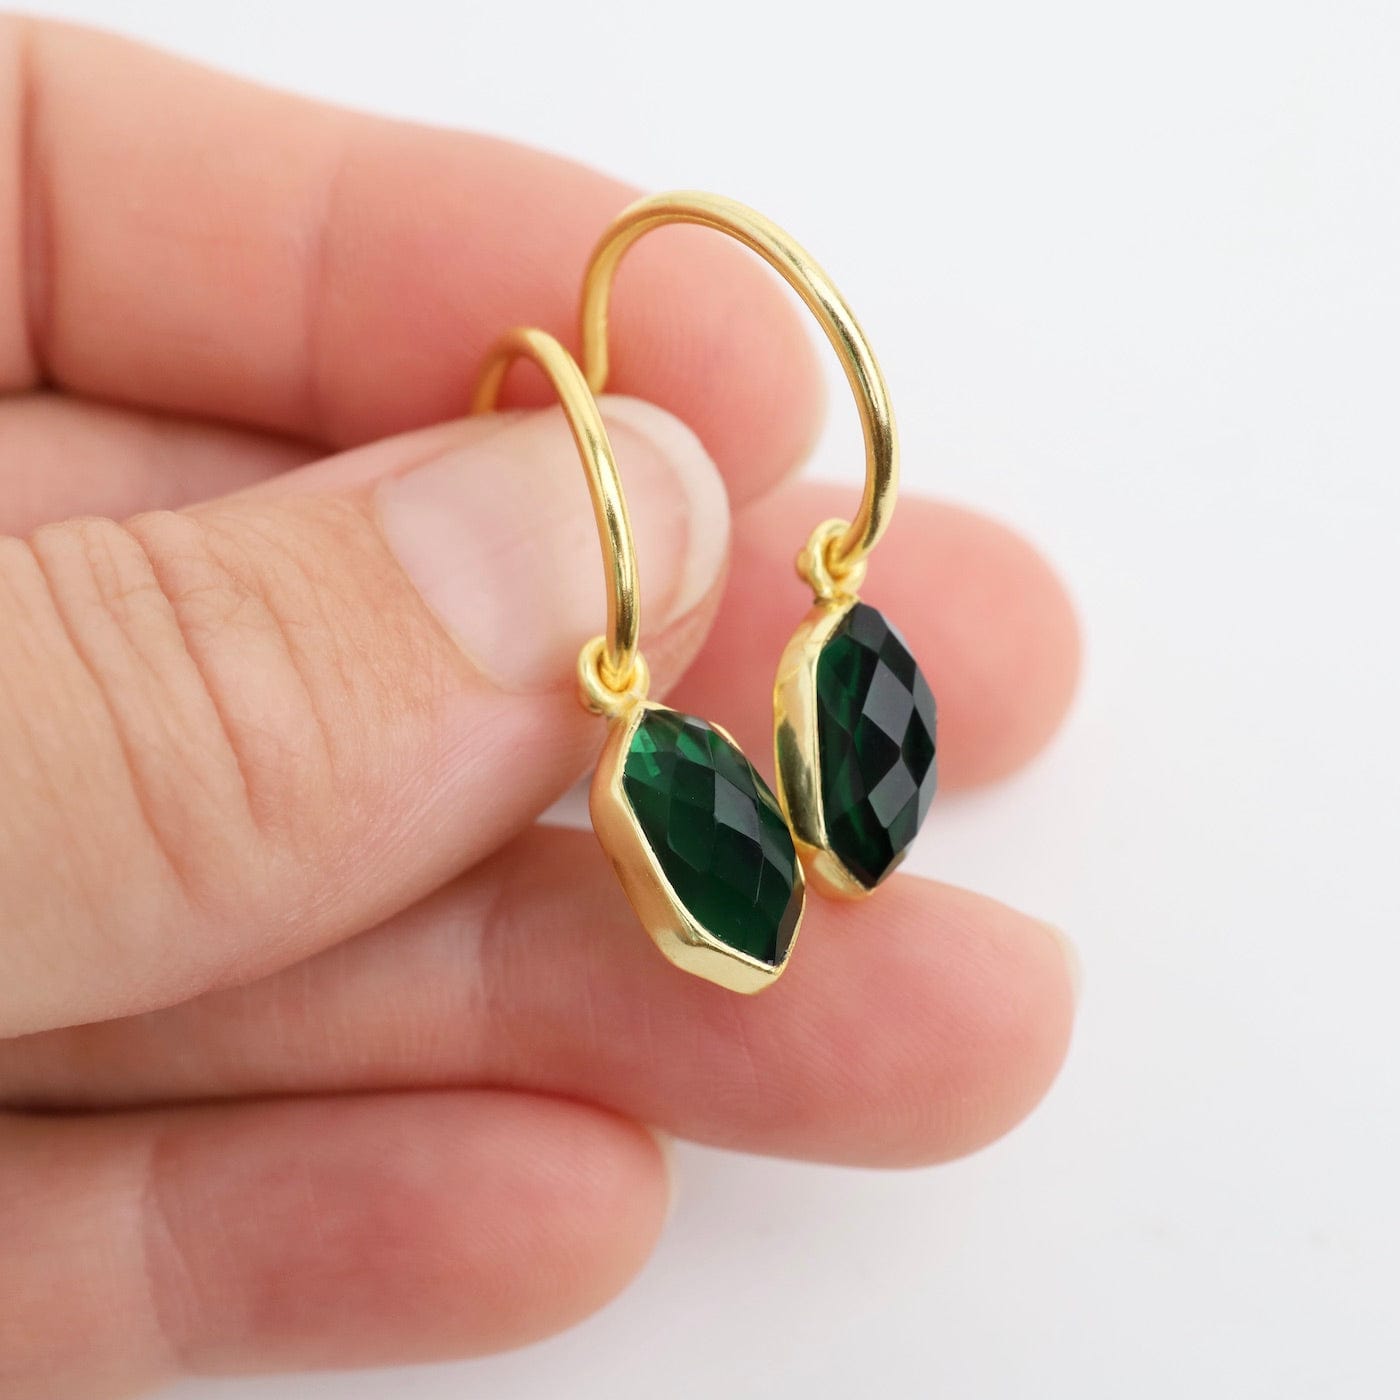 EAR-GPL Gold Plated Hoop Earrings with Green Tourmaline Drop